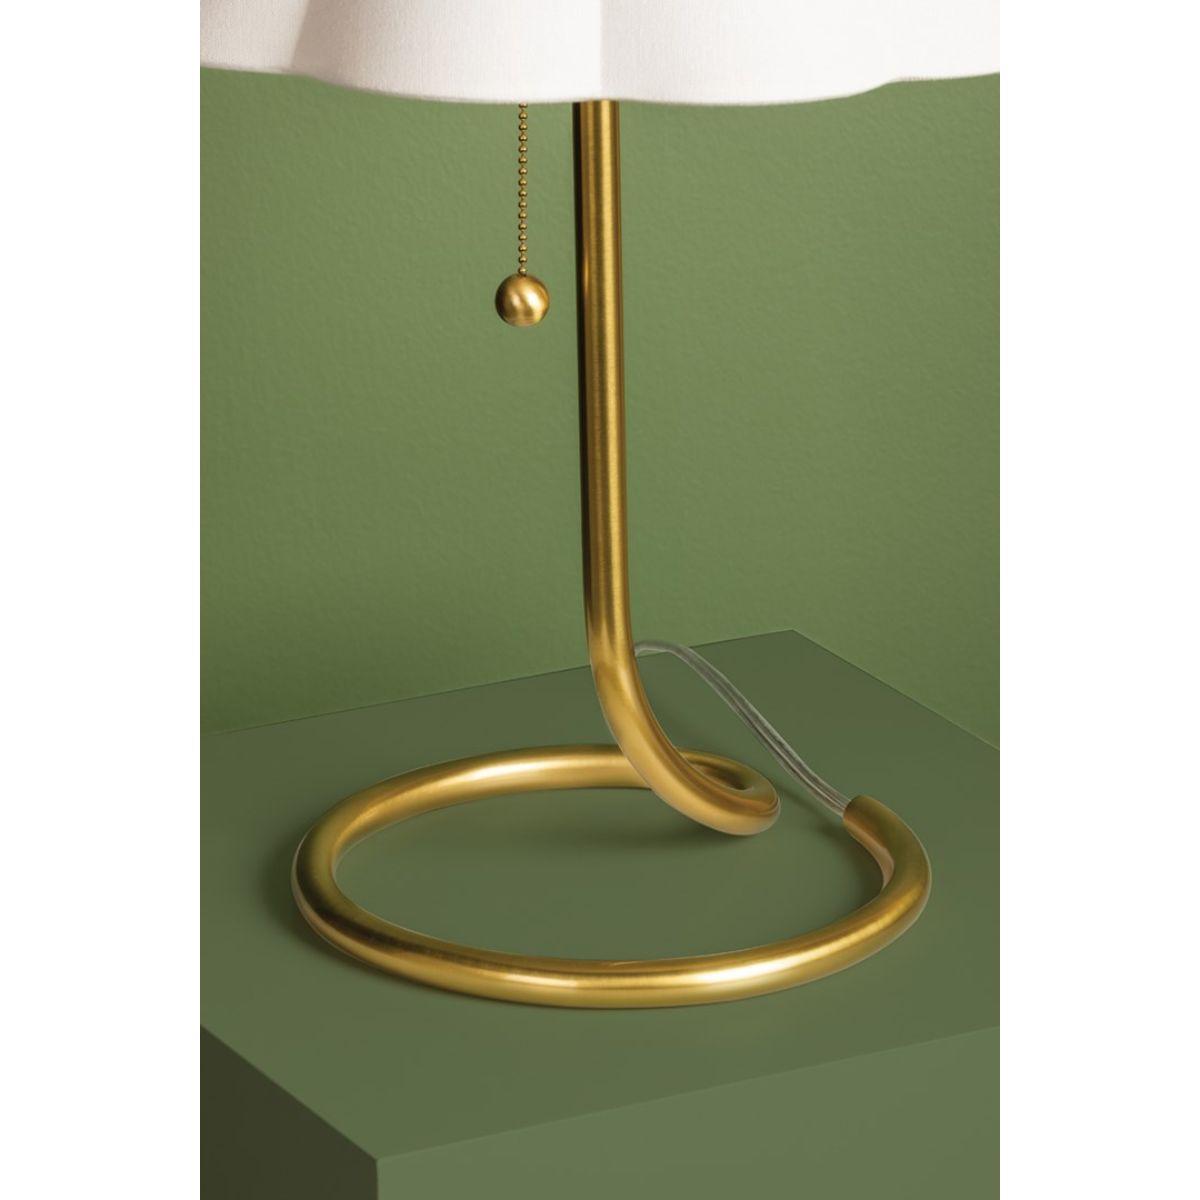 Martha Table Lamp Aged Brass Finish